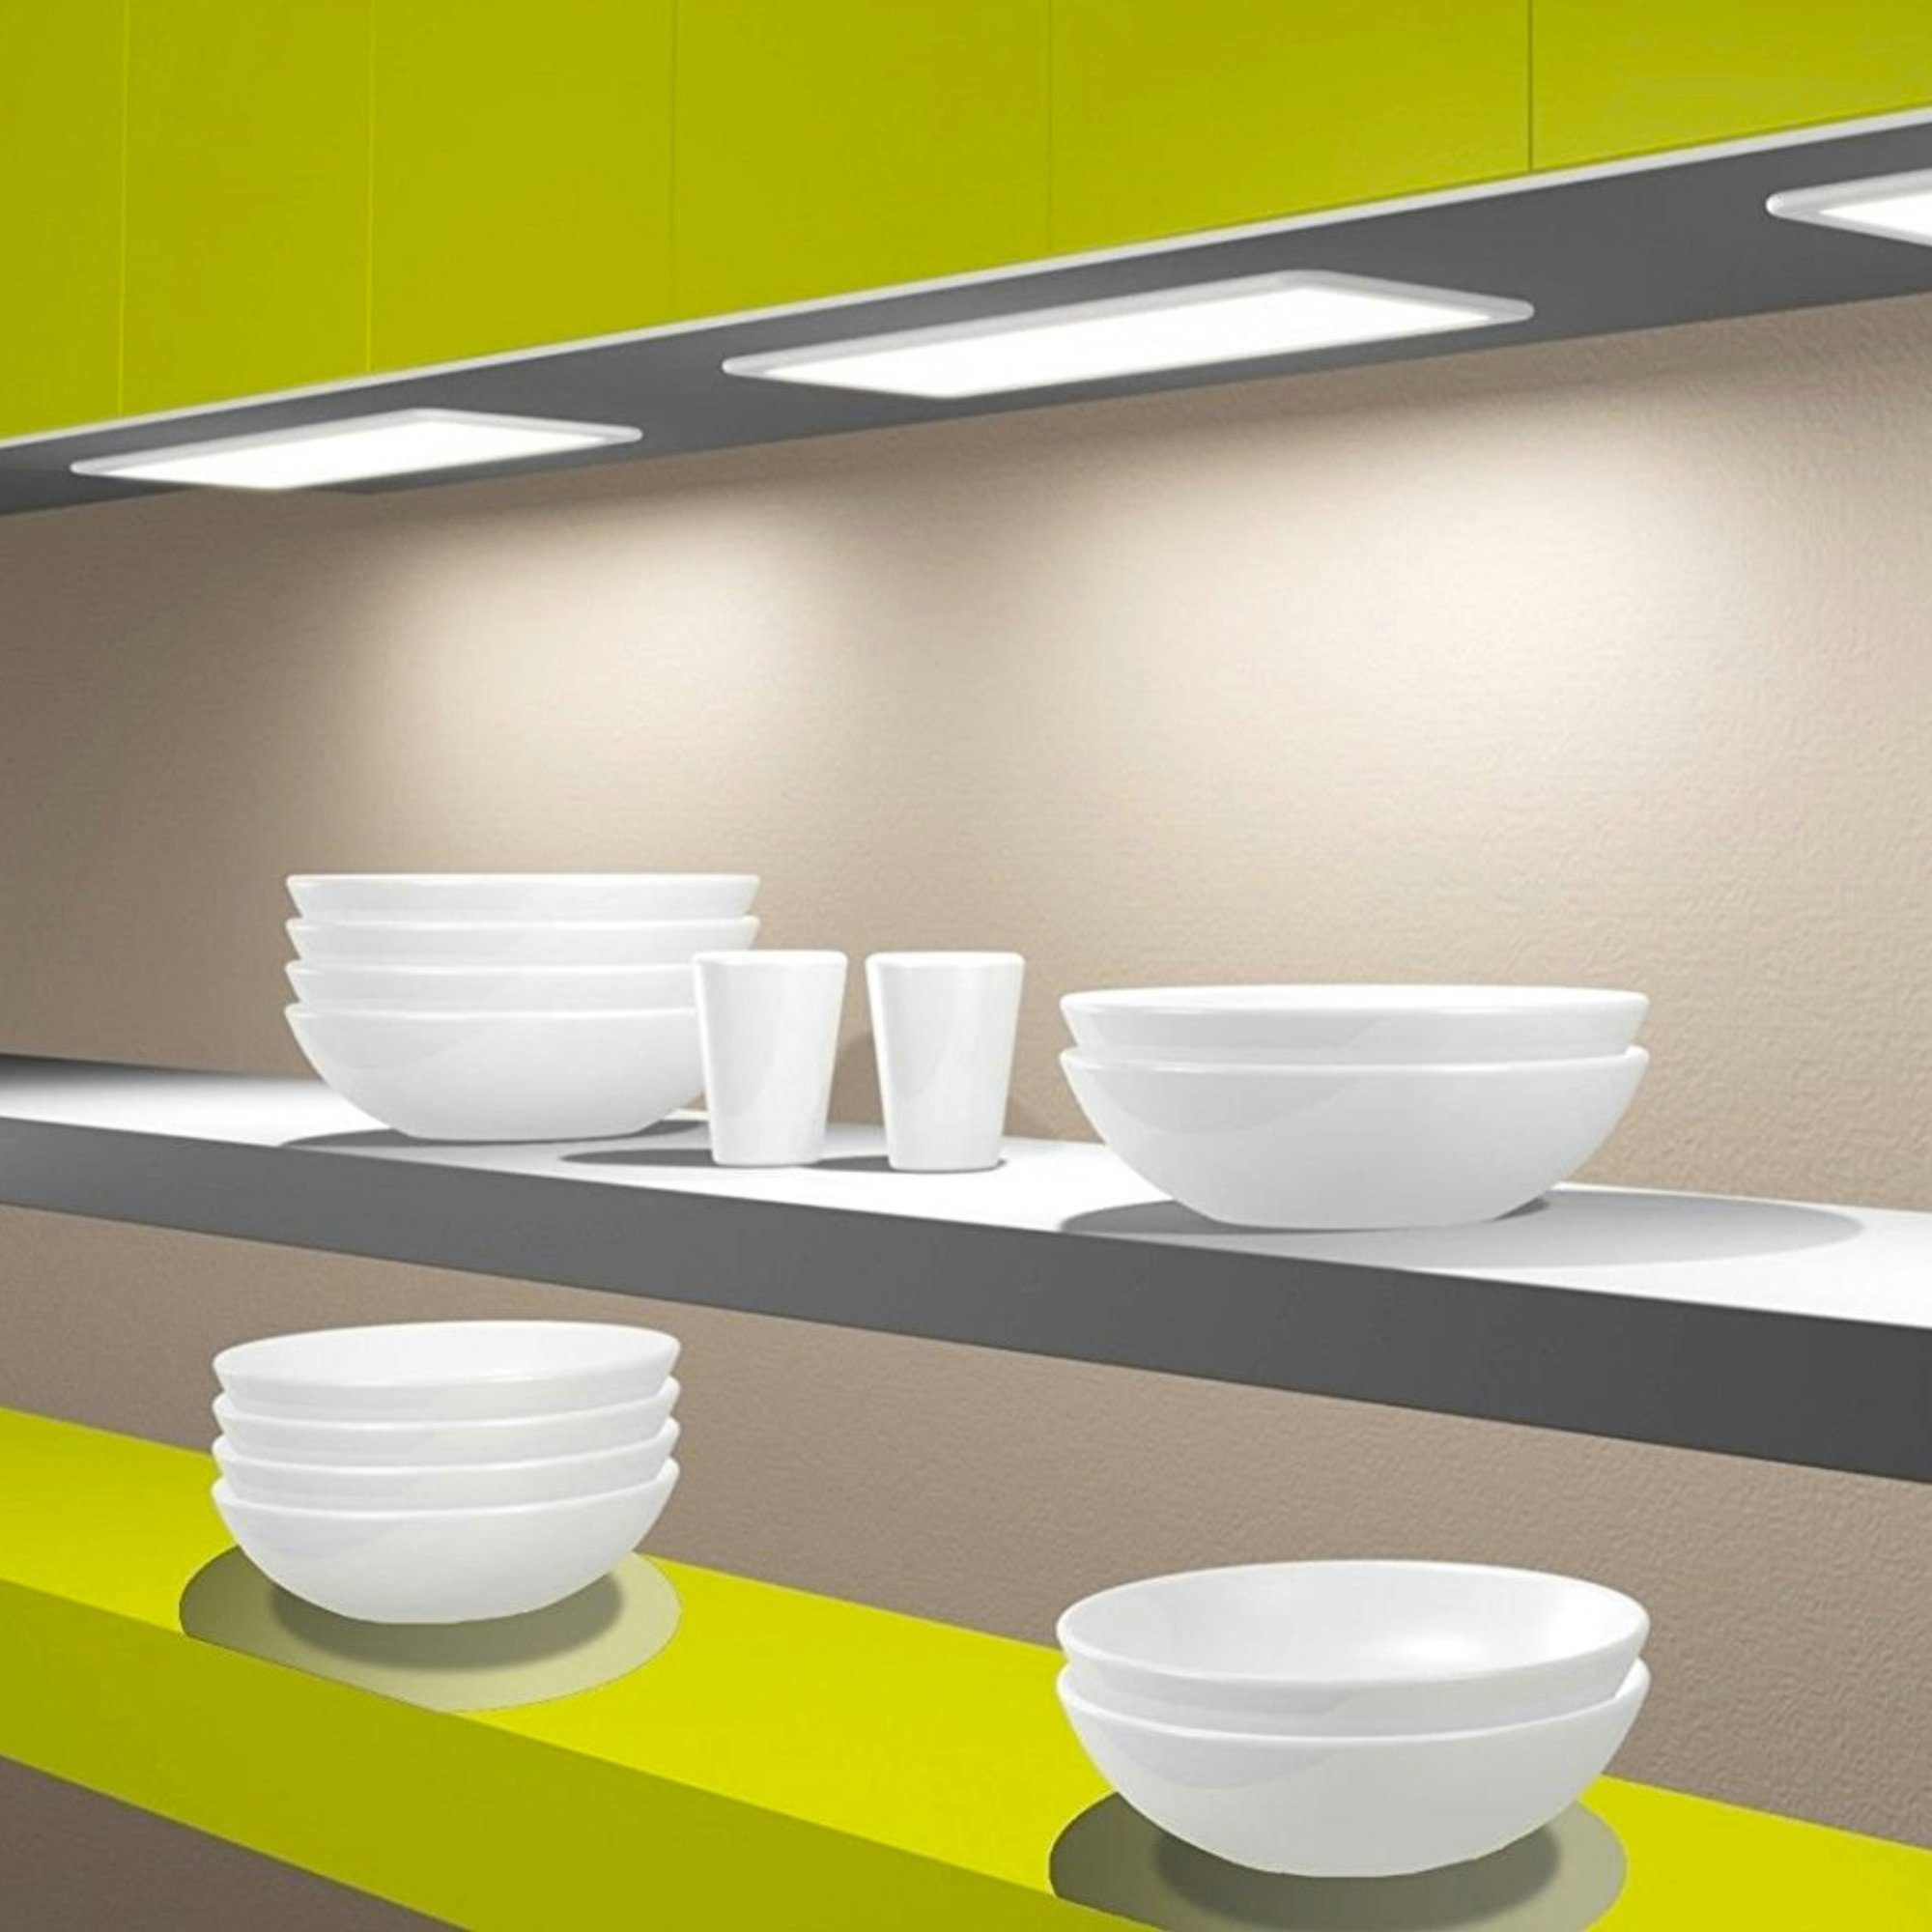 Panel LED Unterbaustrahler kalb Unterbauleuchte Küchenleuchte Unterbauleuchte Küche 450mm warmweiß, LED dimmbar, warmweiß